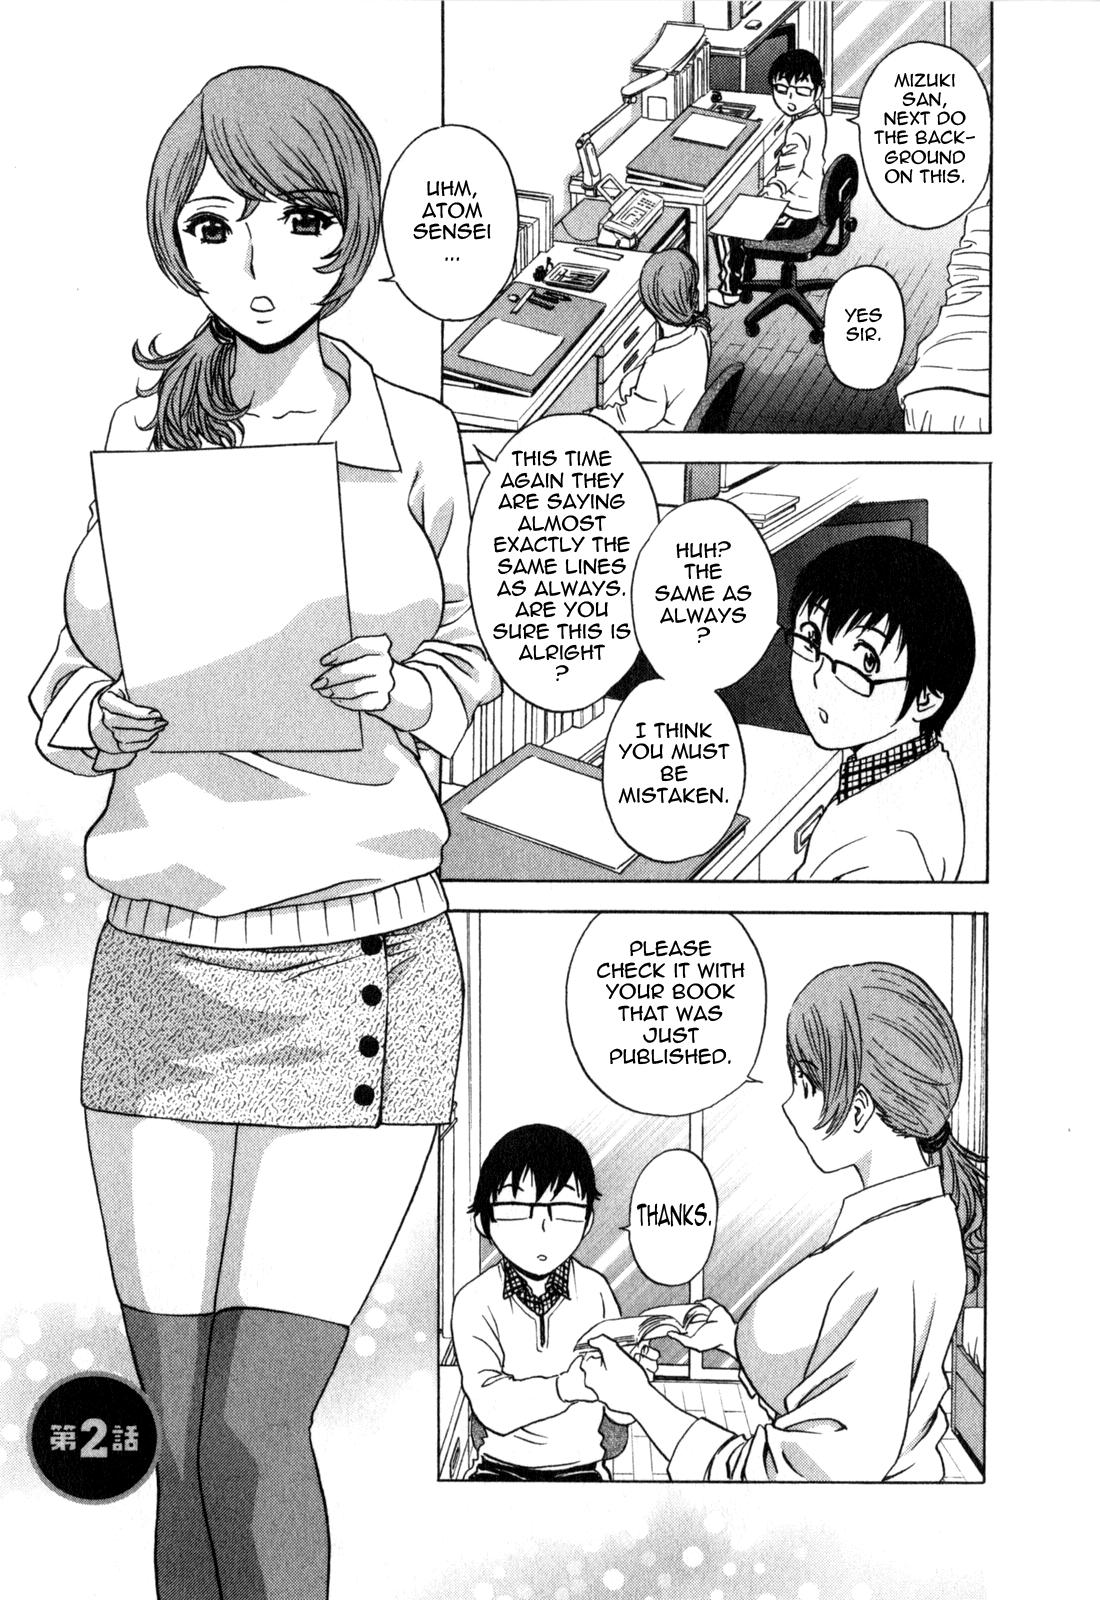 [Hidemaru] Life with Married Women Just Like a Manga 3 - Ch. 1-4 [English] {Tadanohito} 27